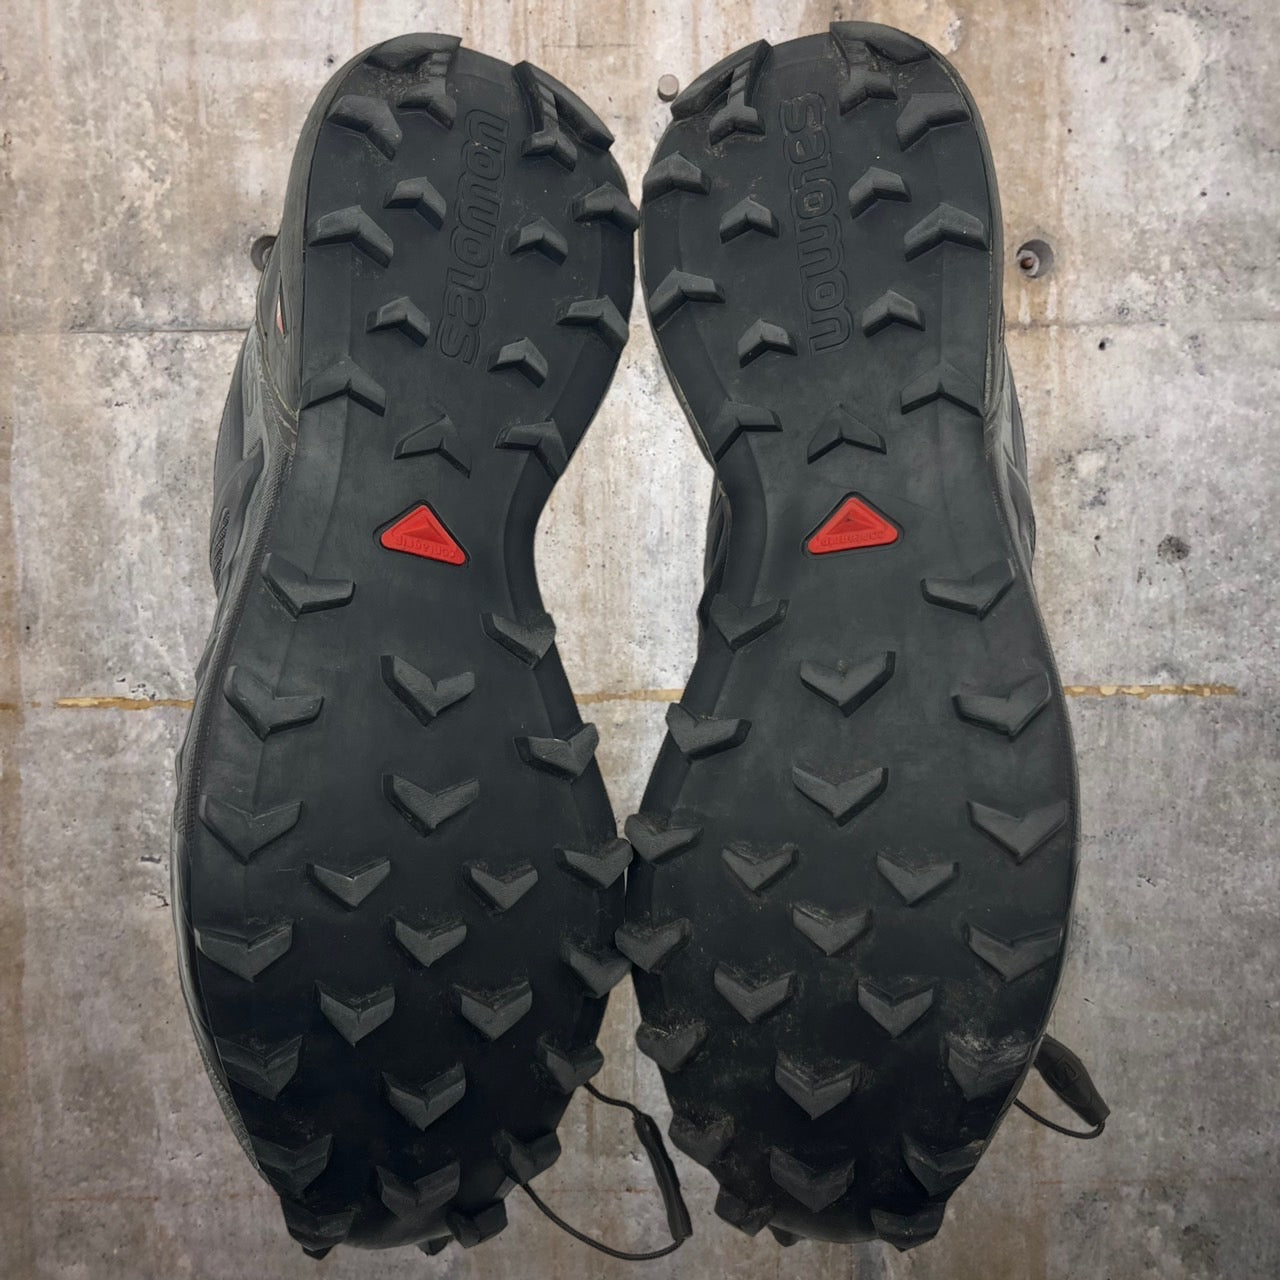 Salomon(サロモン) Speedcross 4 Trail Running Shoes 27.5cm ブラック